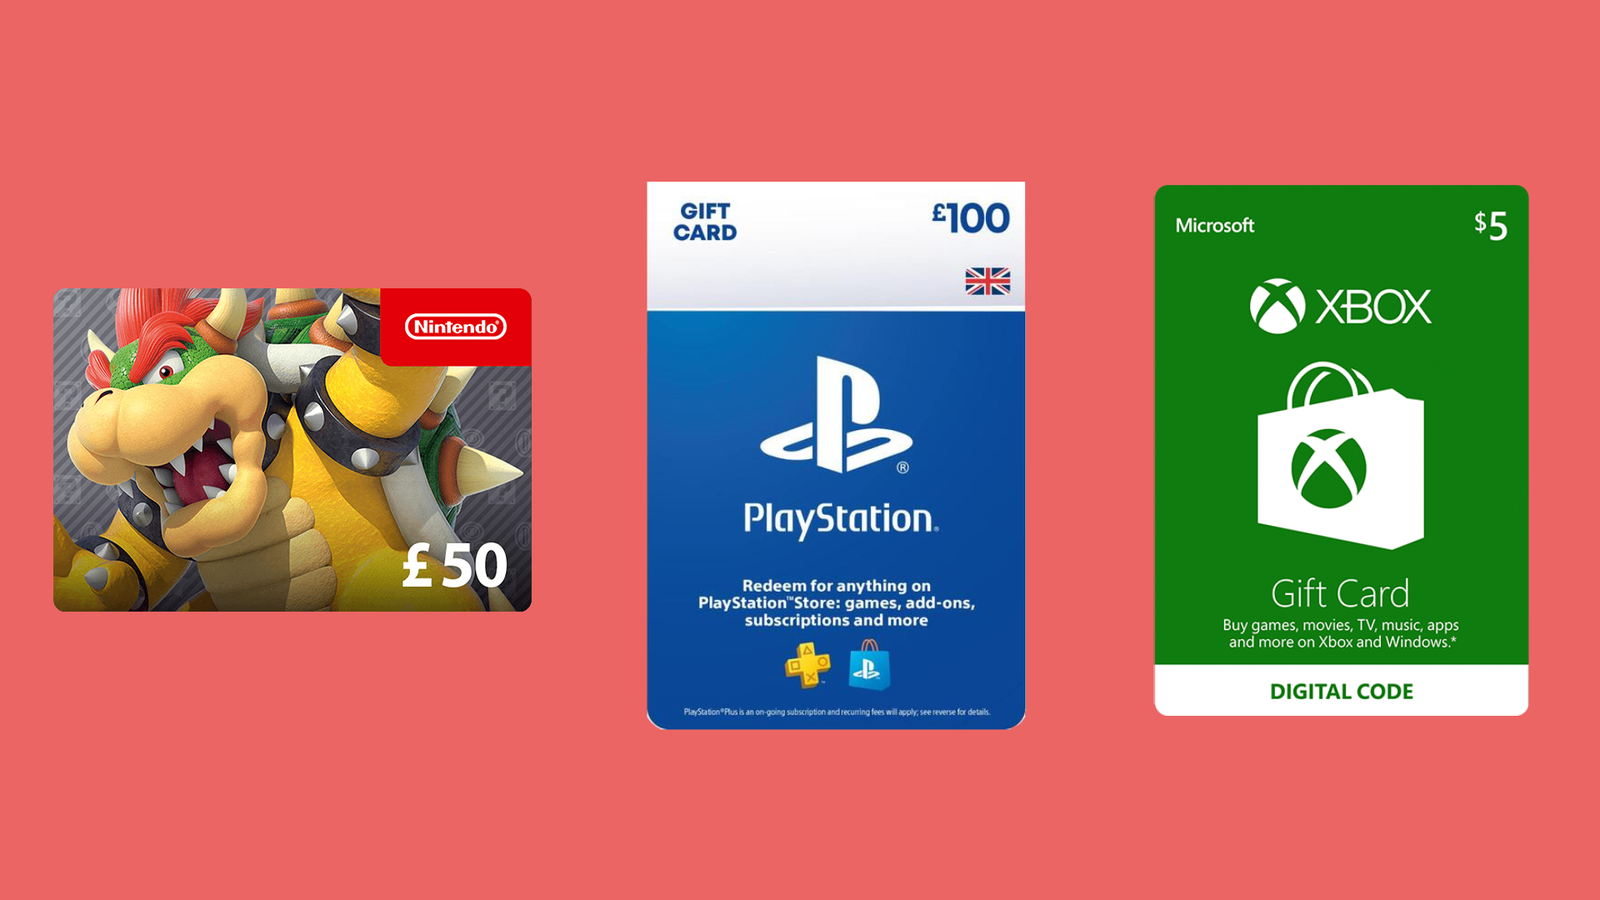 PlayStation Store Gifting $100 Gift Card (Digital)